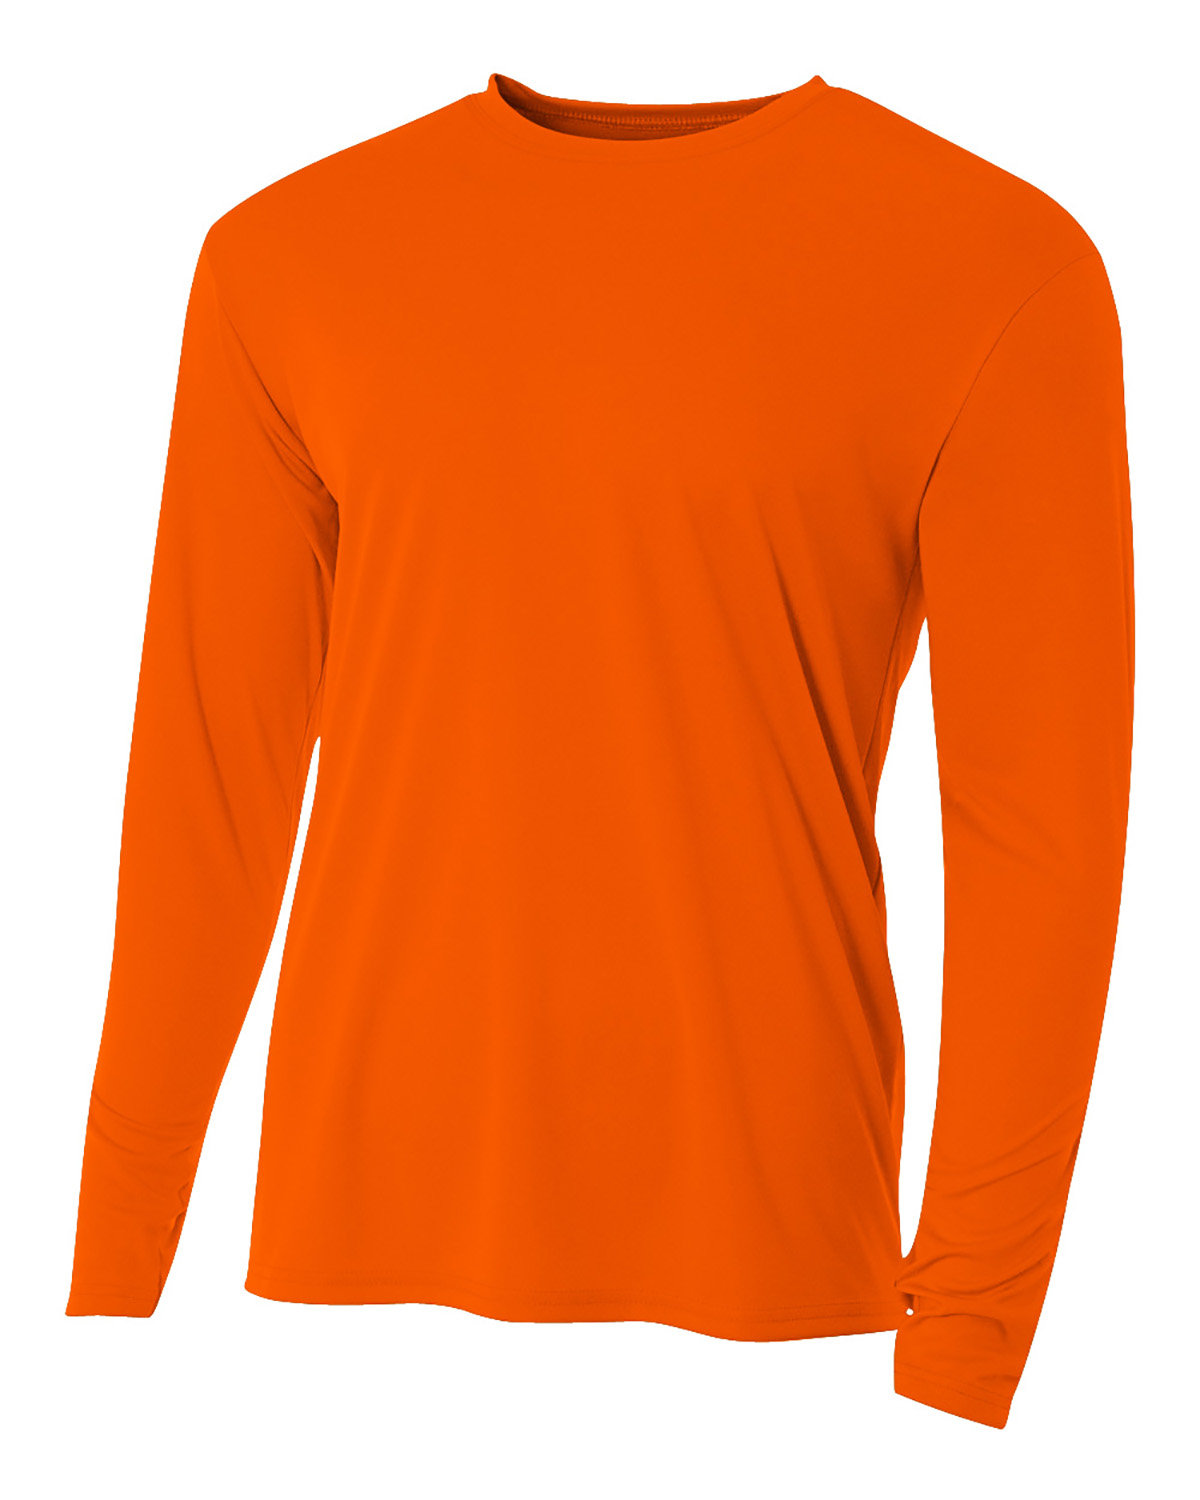 A4 Men's Cooling Performance Long Sleeve T-Shirt SAFETY ORANGE 